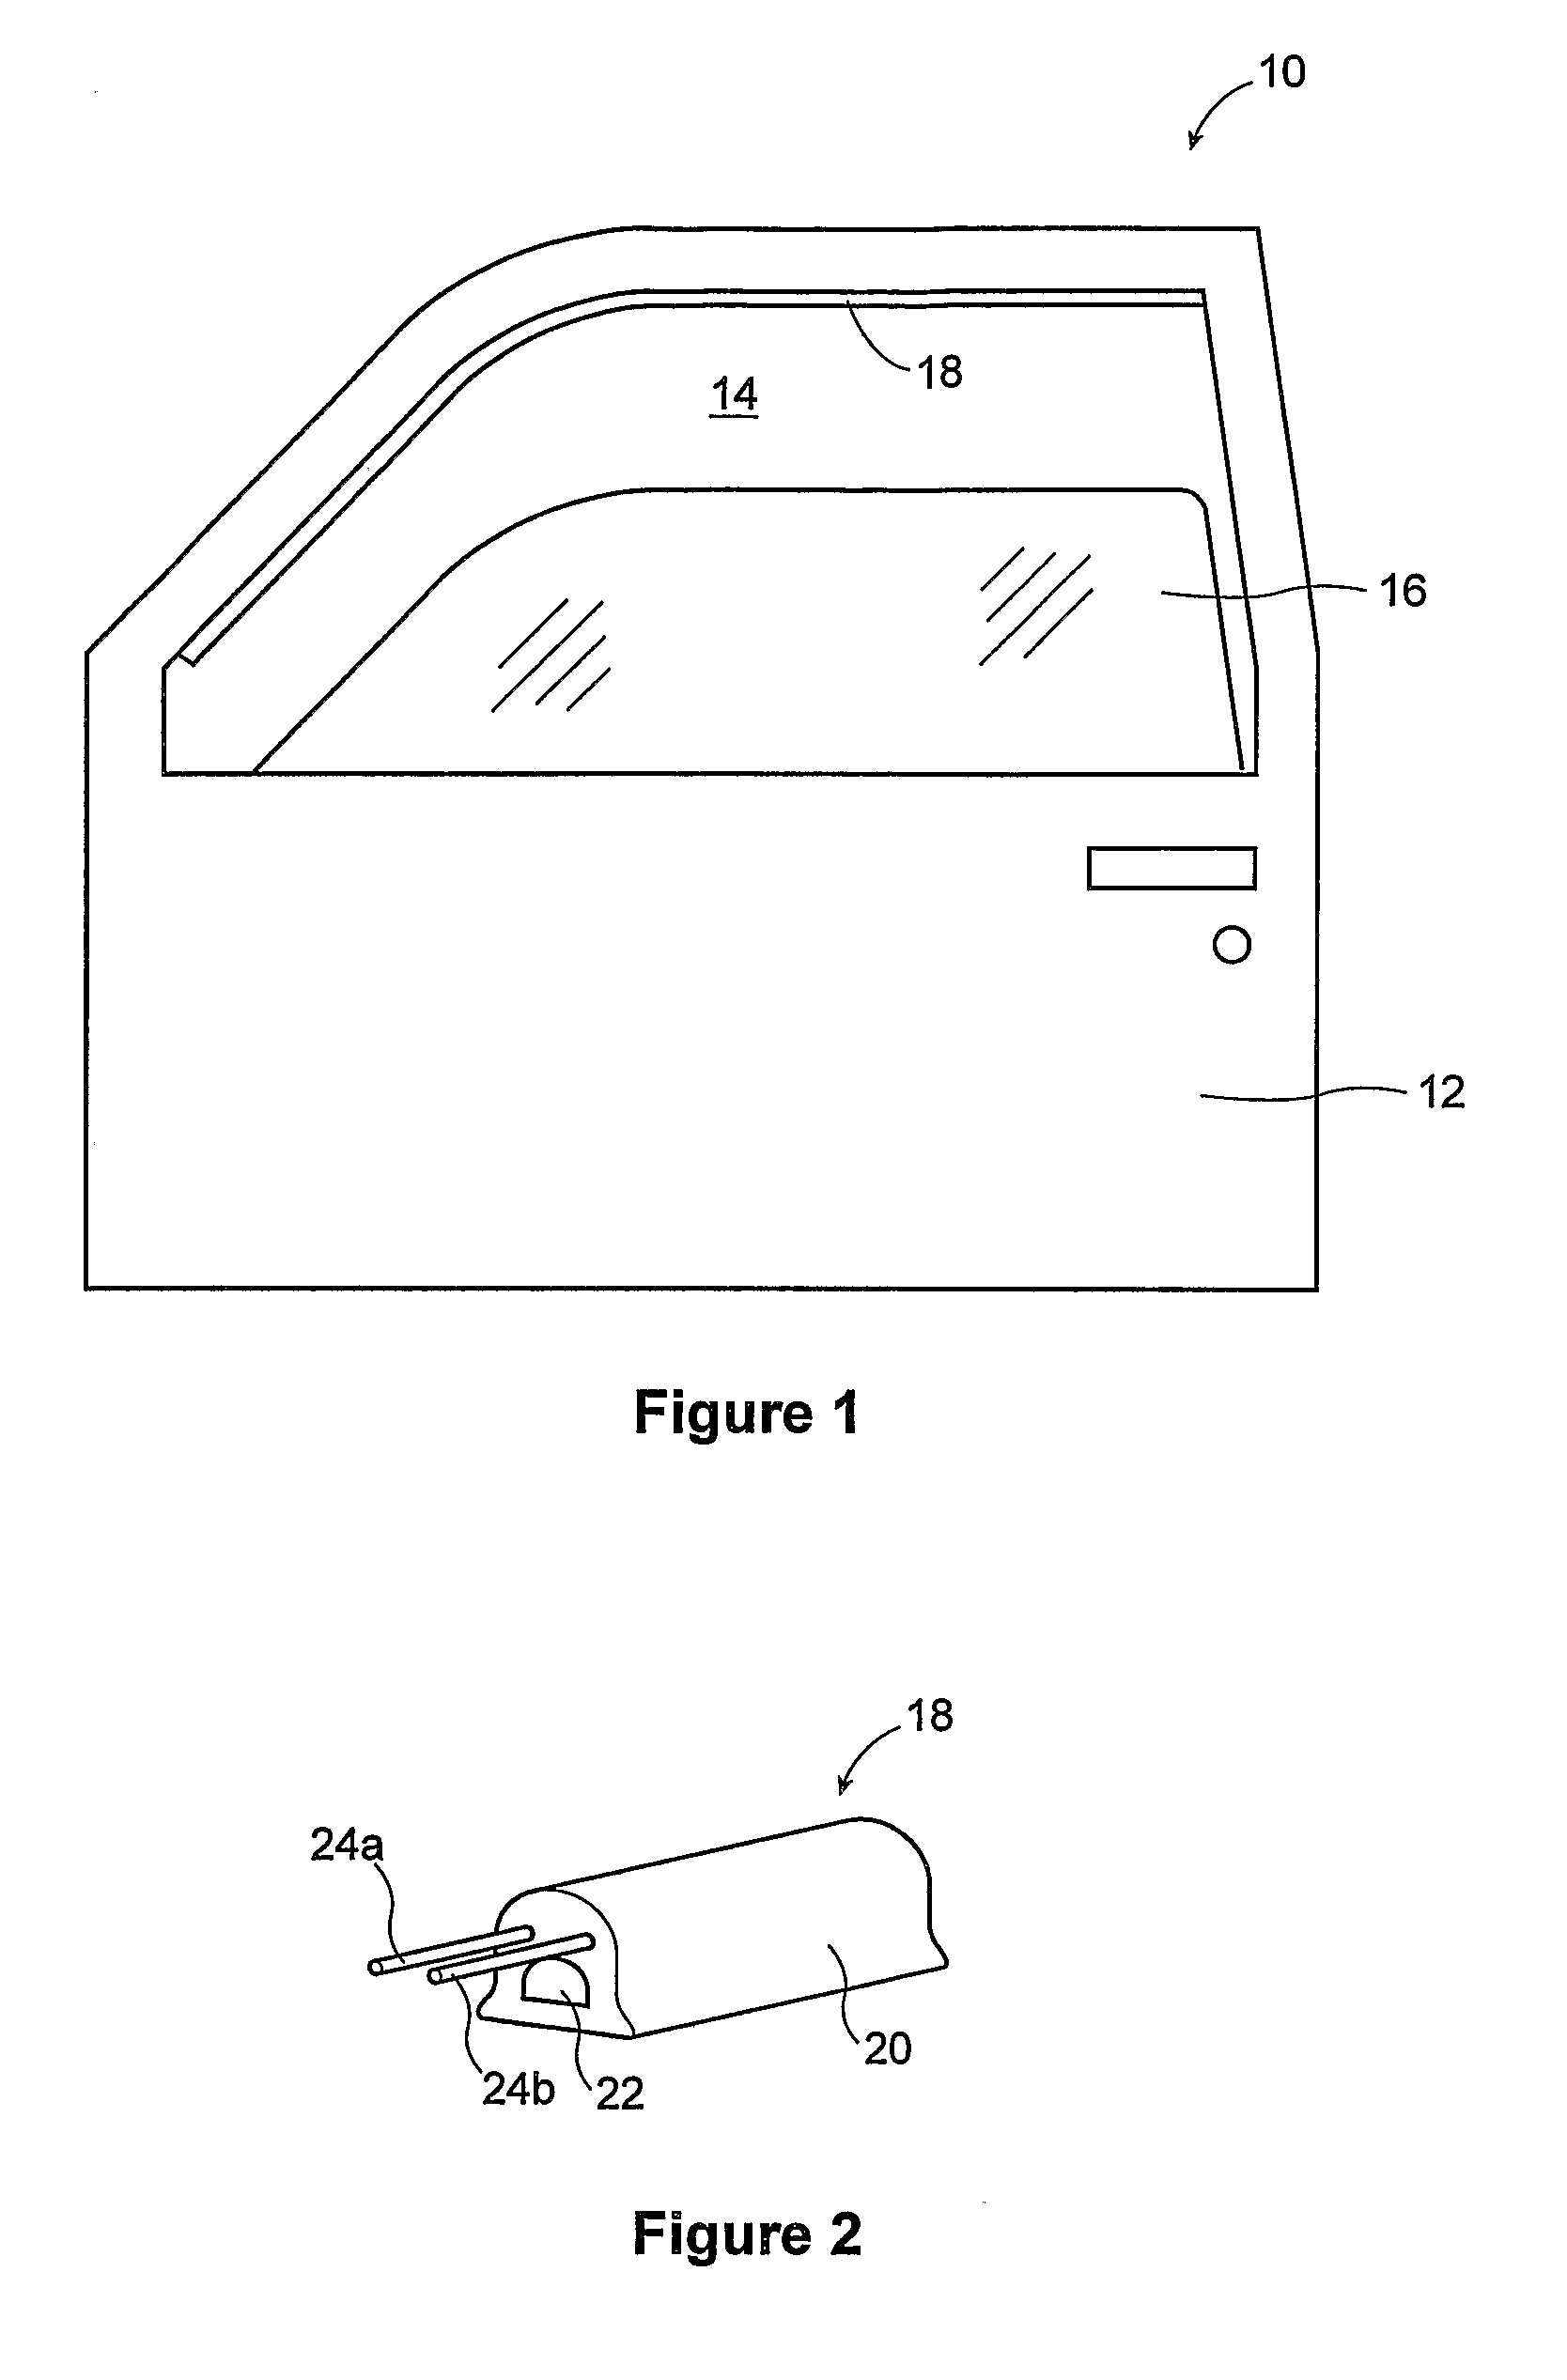 Differential anti-pinch capacitive sensor